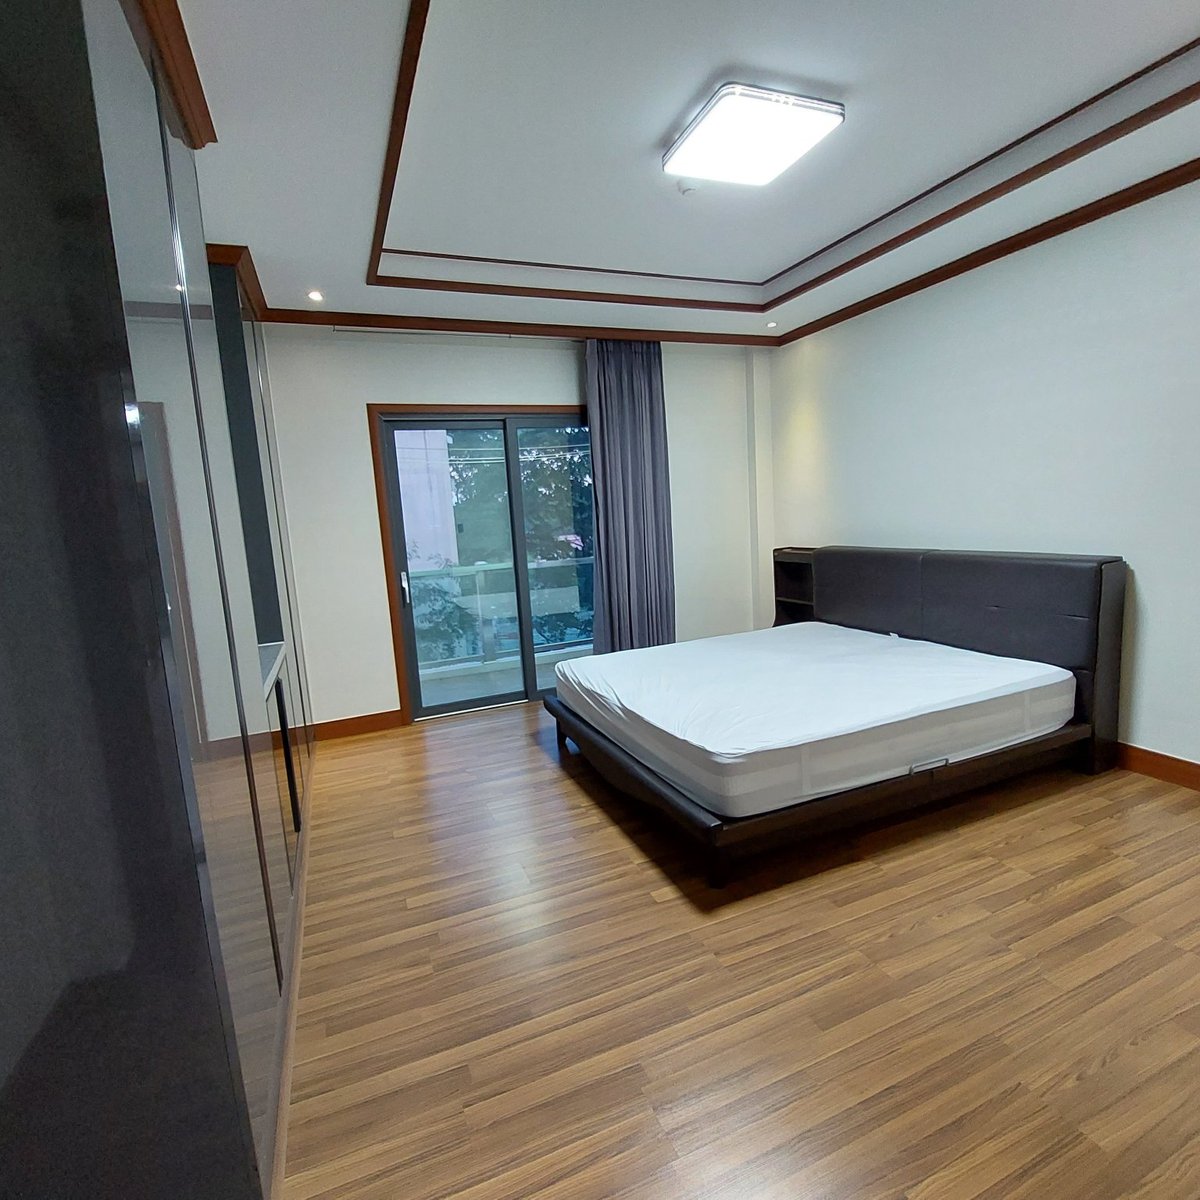 2 Bedroom Condo Unit for Sale in Clark Freeport Zone Pampanga